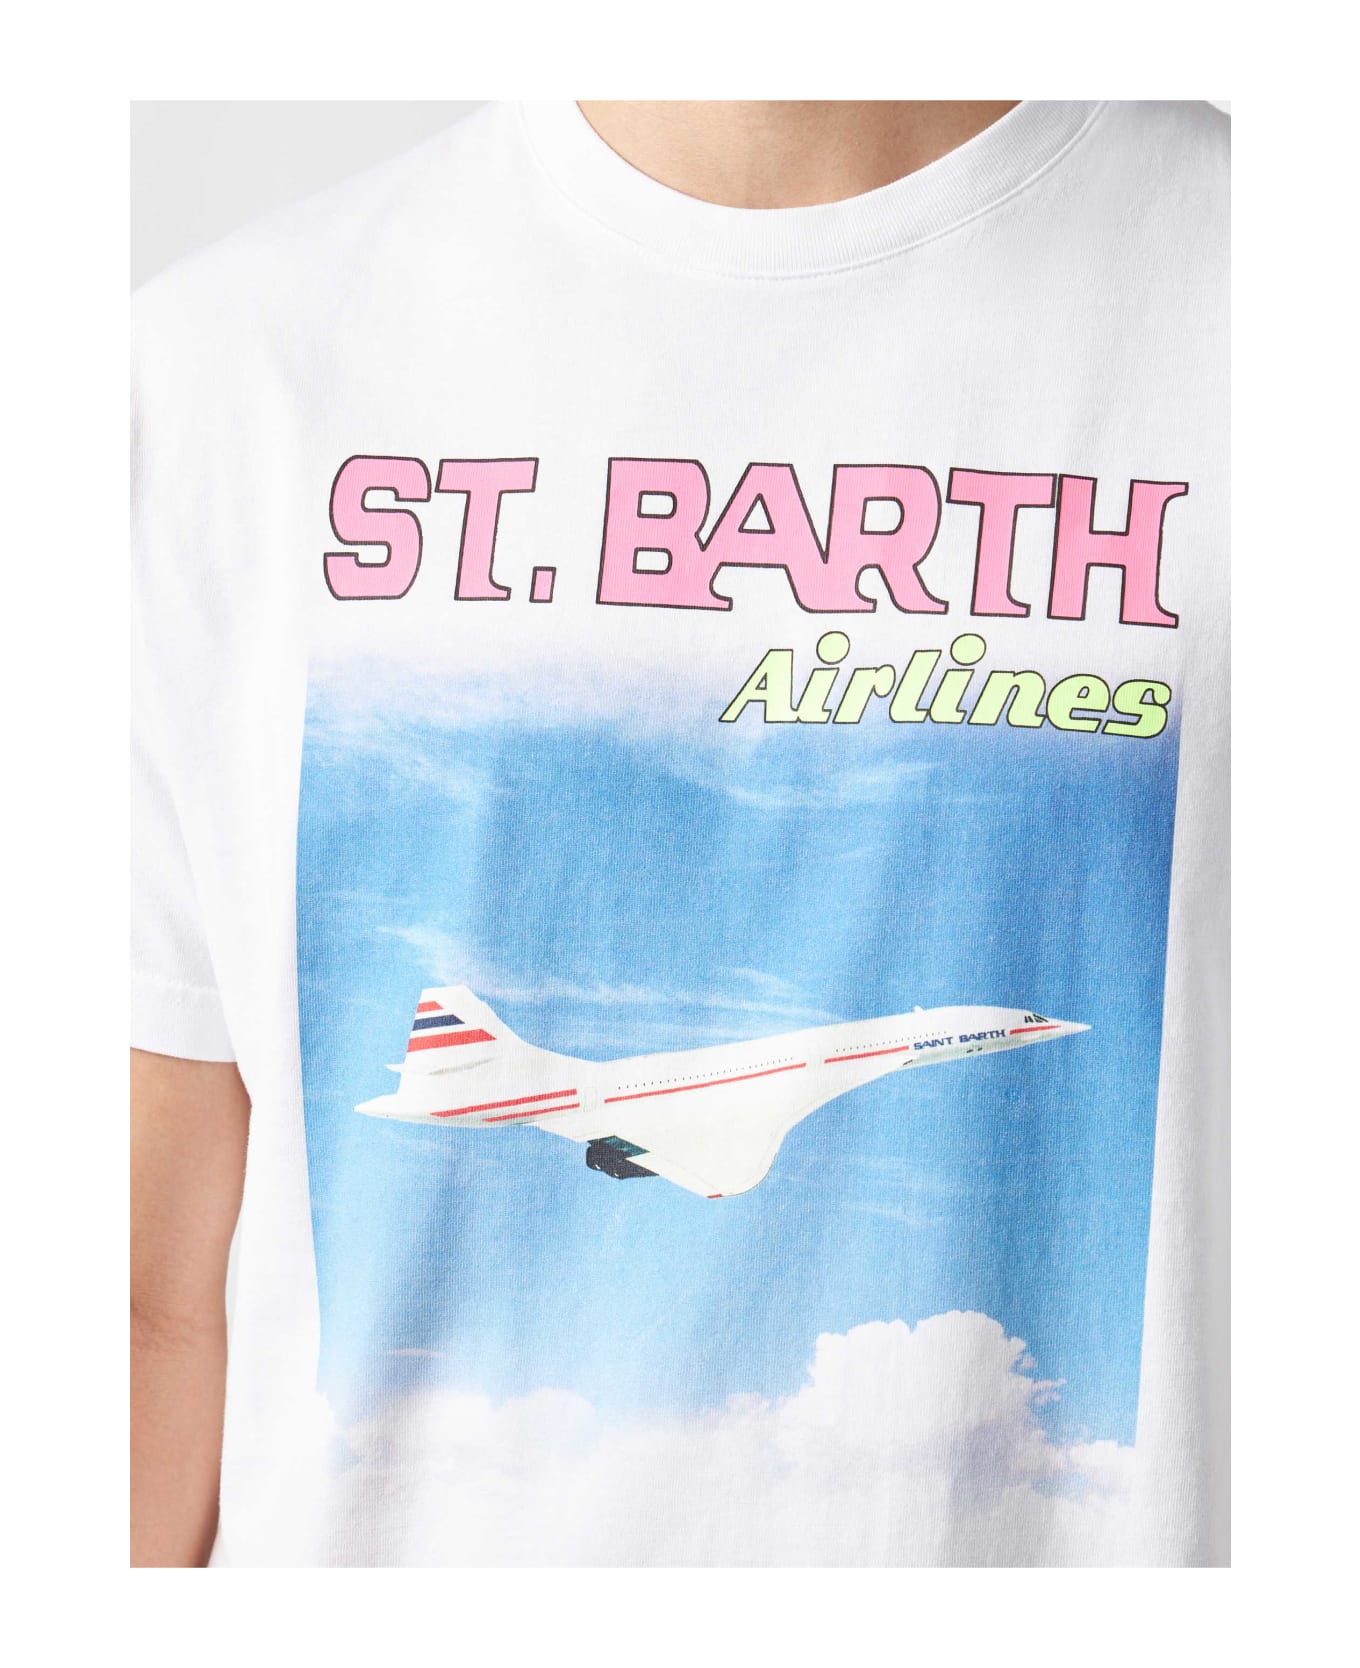 MC2 Saint Barth Man Cotton T-shirt With St.barth Airlines Print - WHITE